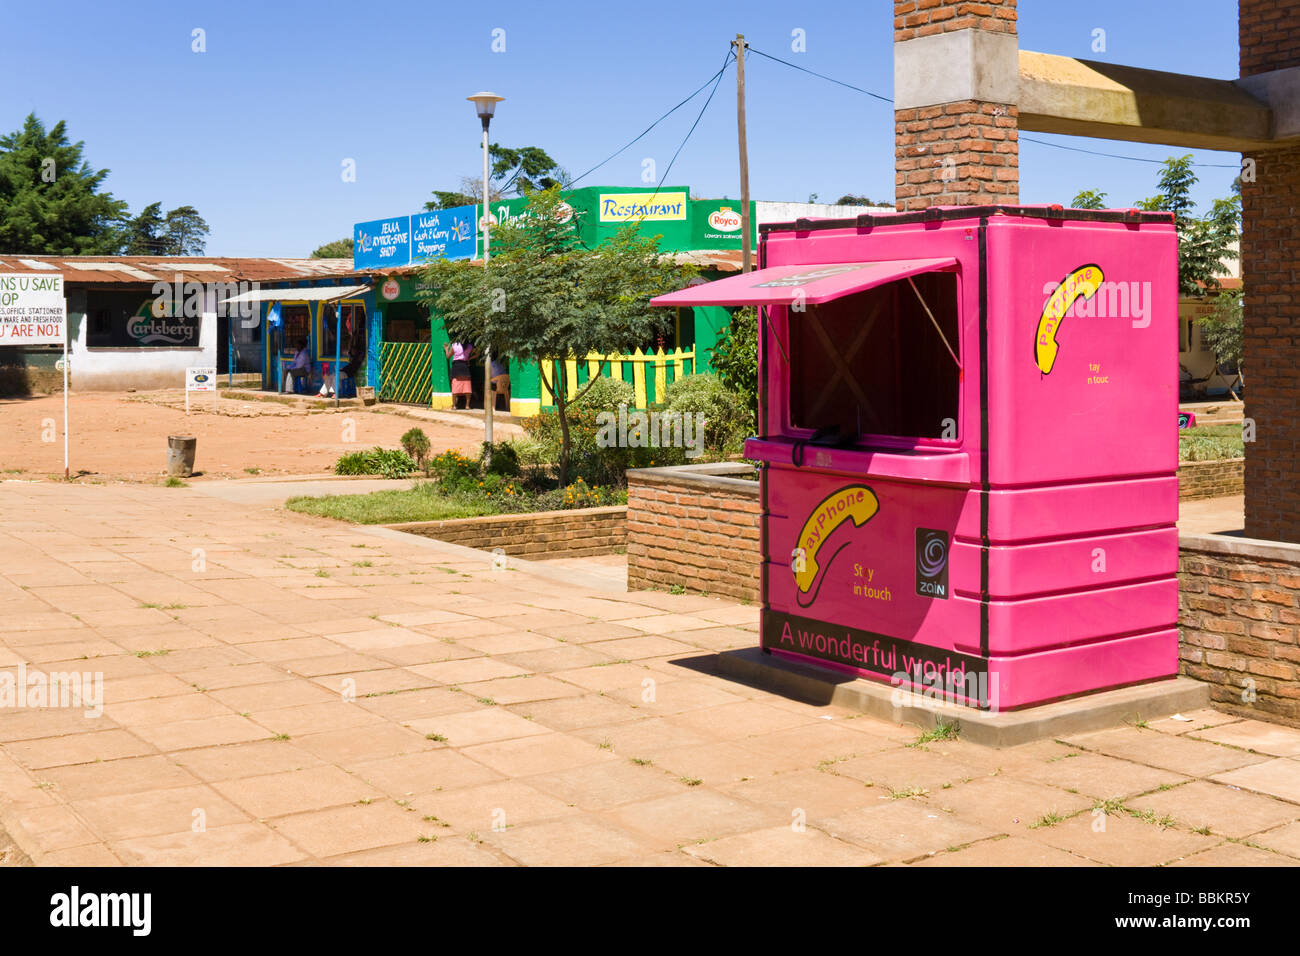 Zain mobile phone operator (replaced Celtel) kiosk at Dedza, Malawi, Africa Stock Photo